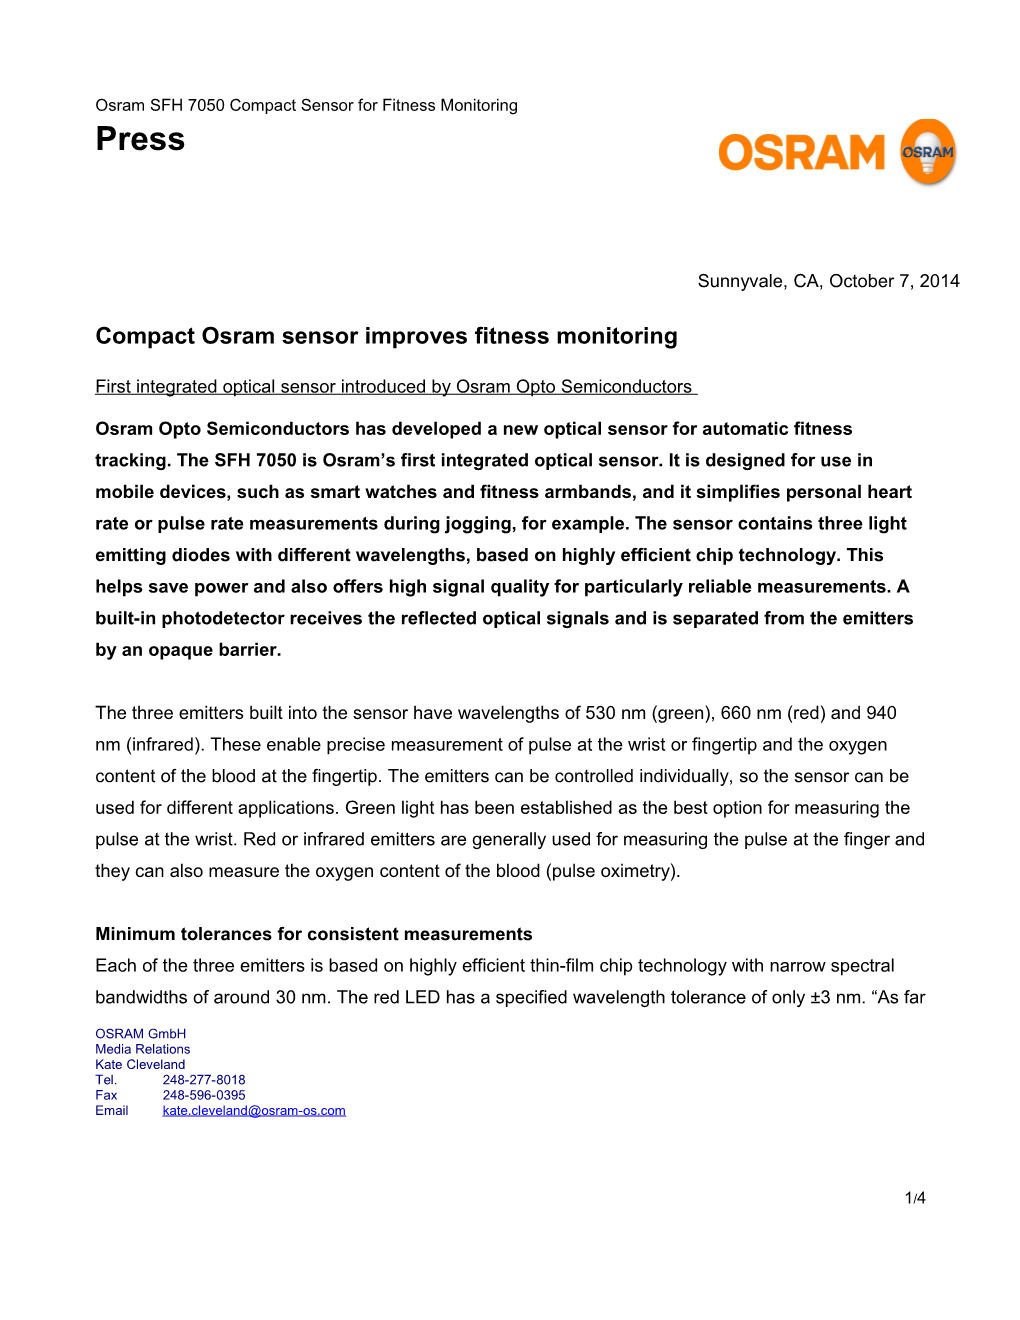 Compact Osram Sensor Improves Fitness Monitoring